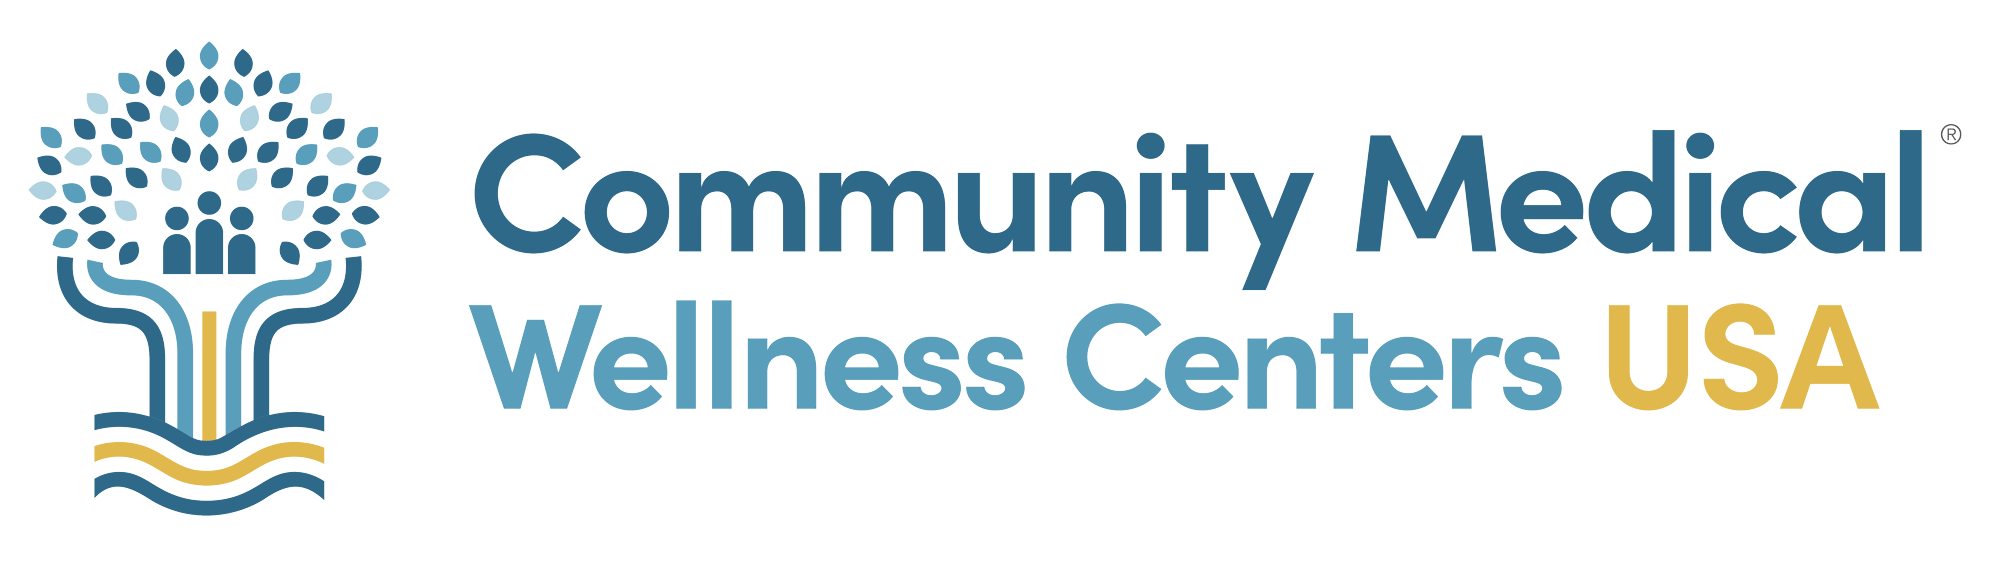 Community Medical Wellness Centers USA (CMWC)